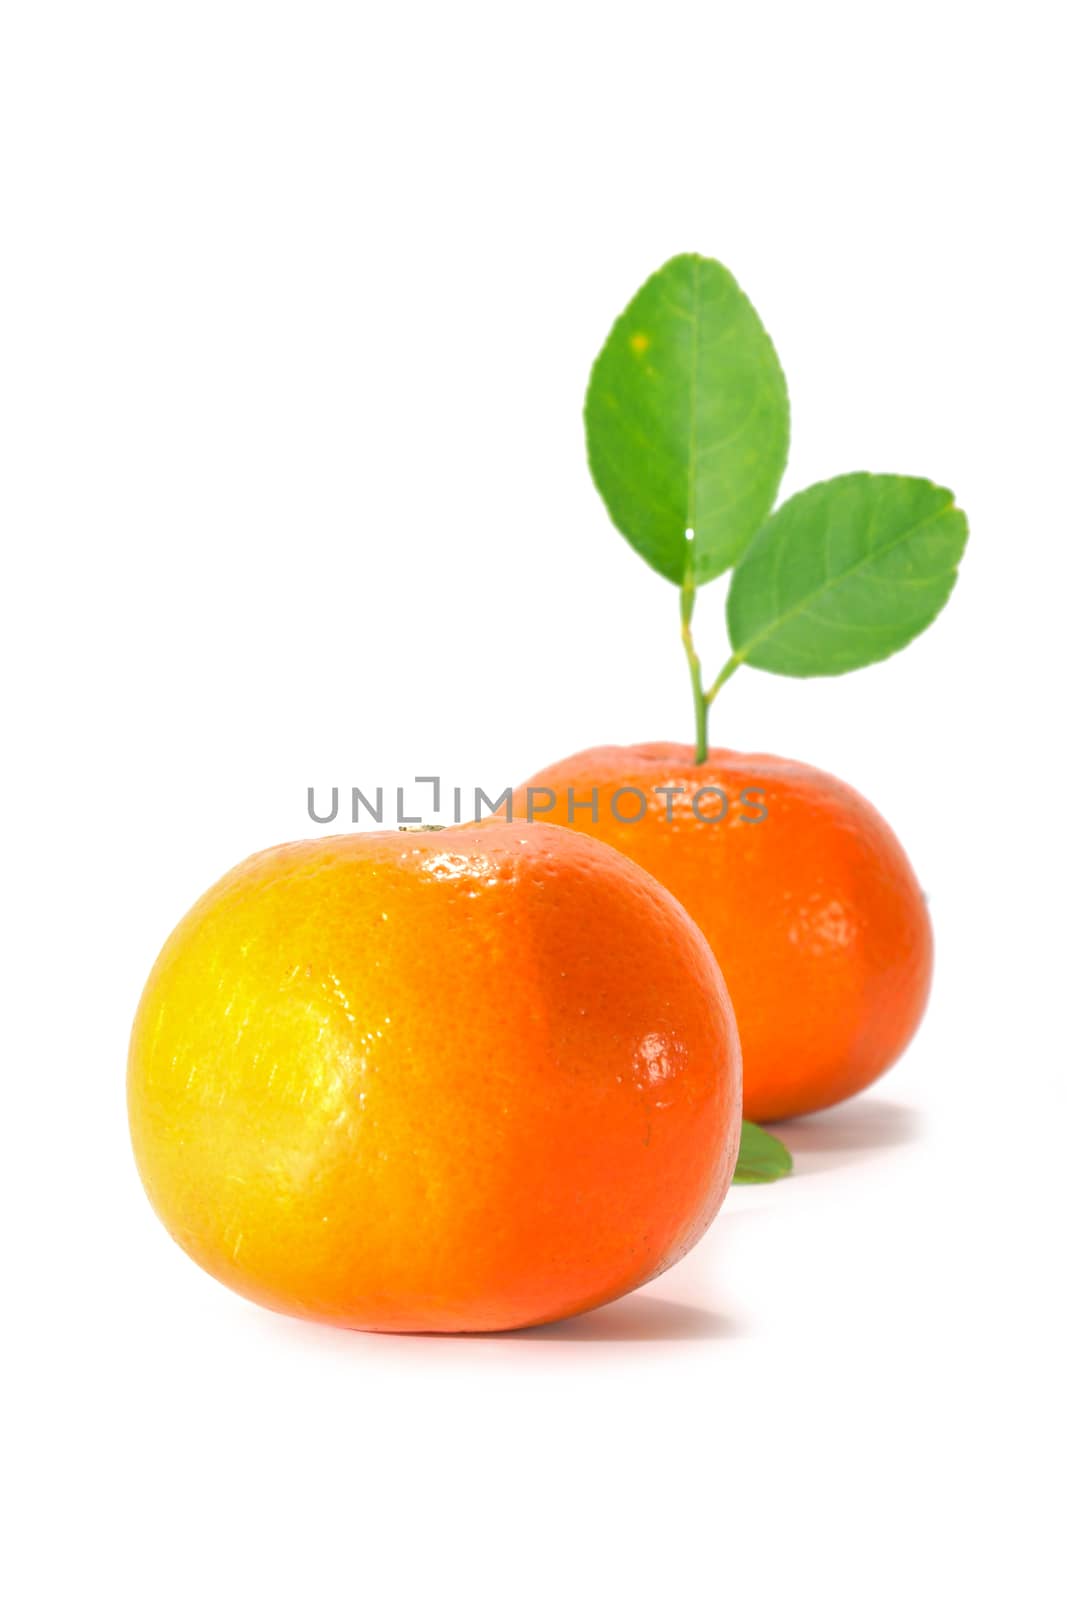 Orange and orange leaves isolated on white background. by Noppharat_th